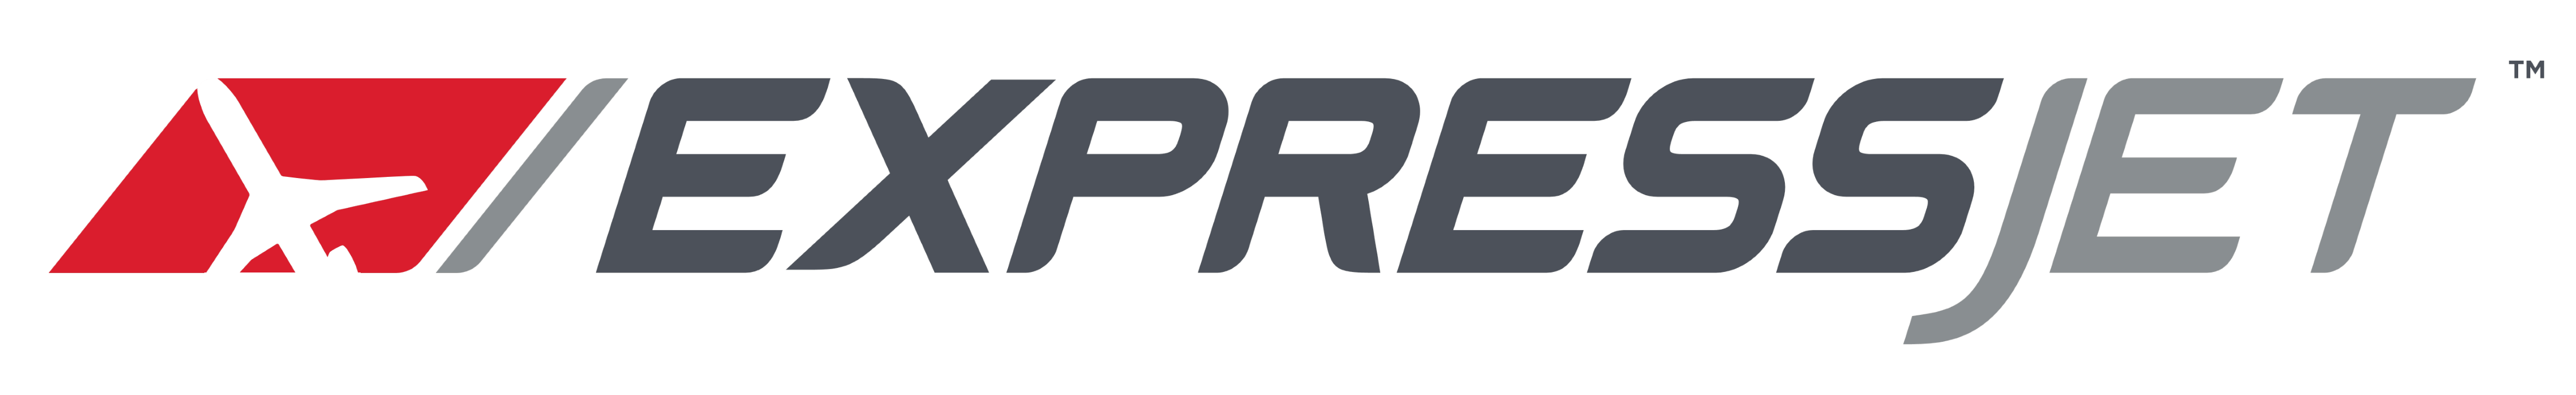 ExpressJet Airlines logo, logotype